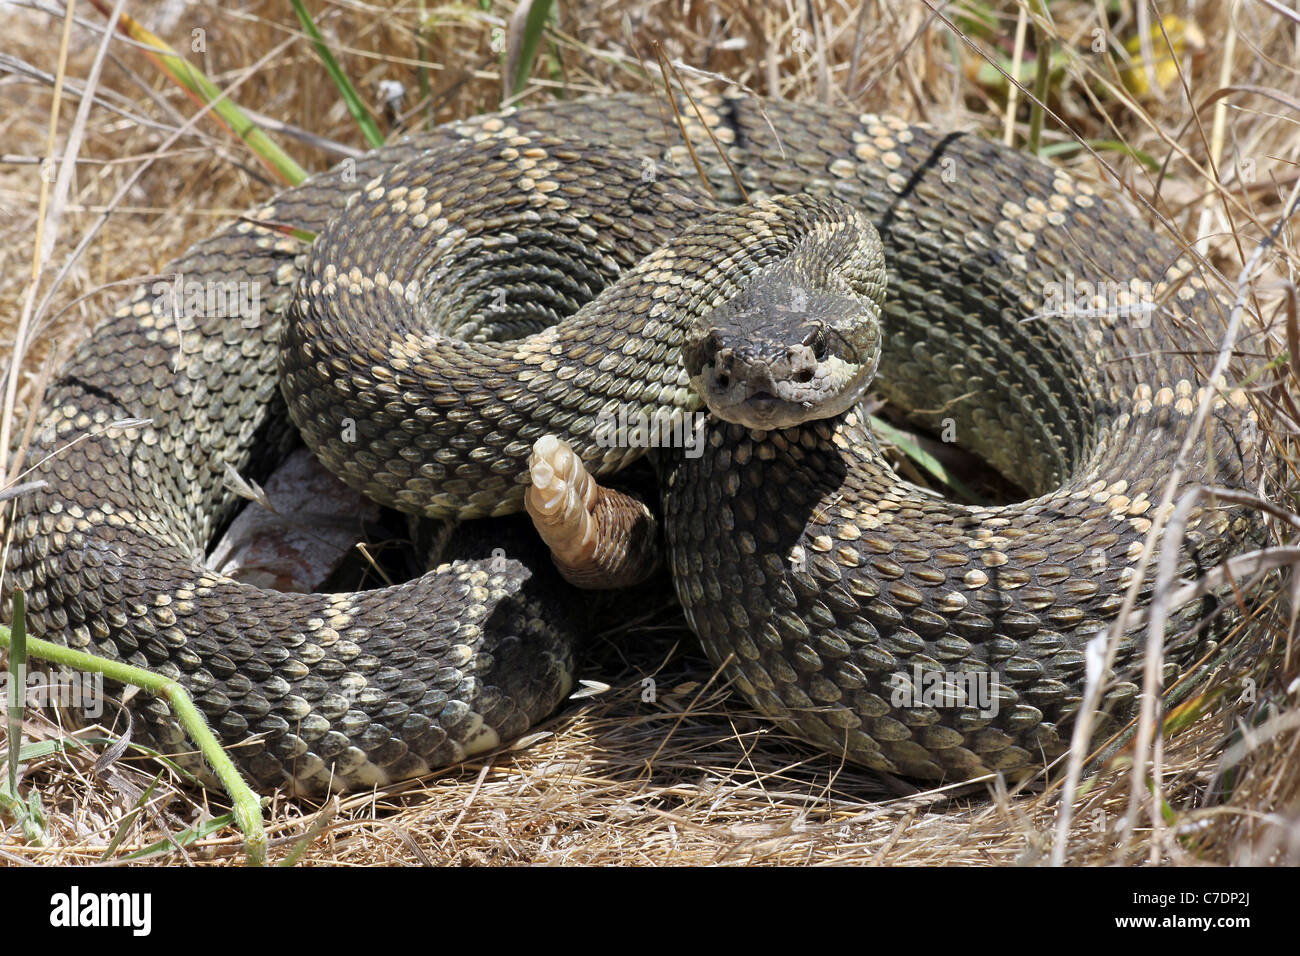 Northern pacific rattlesnake (Crotalus oreganus) in California Stock Photo